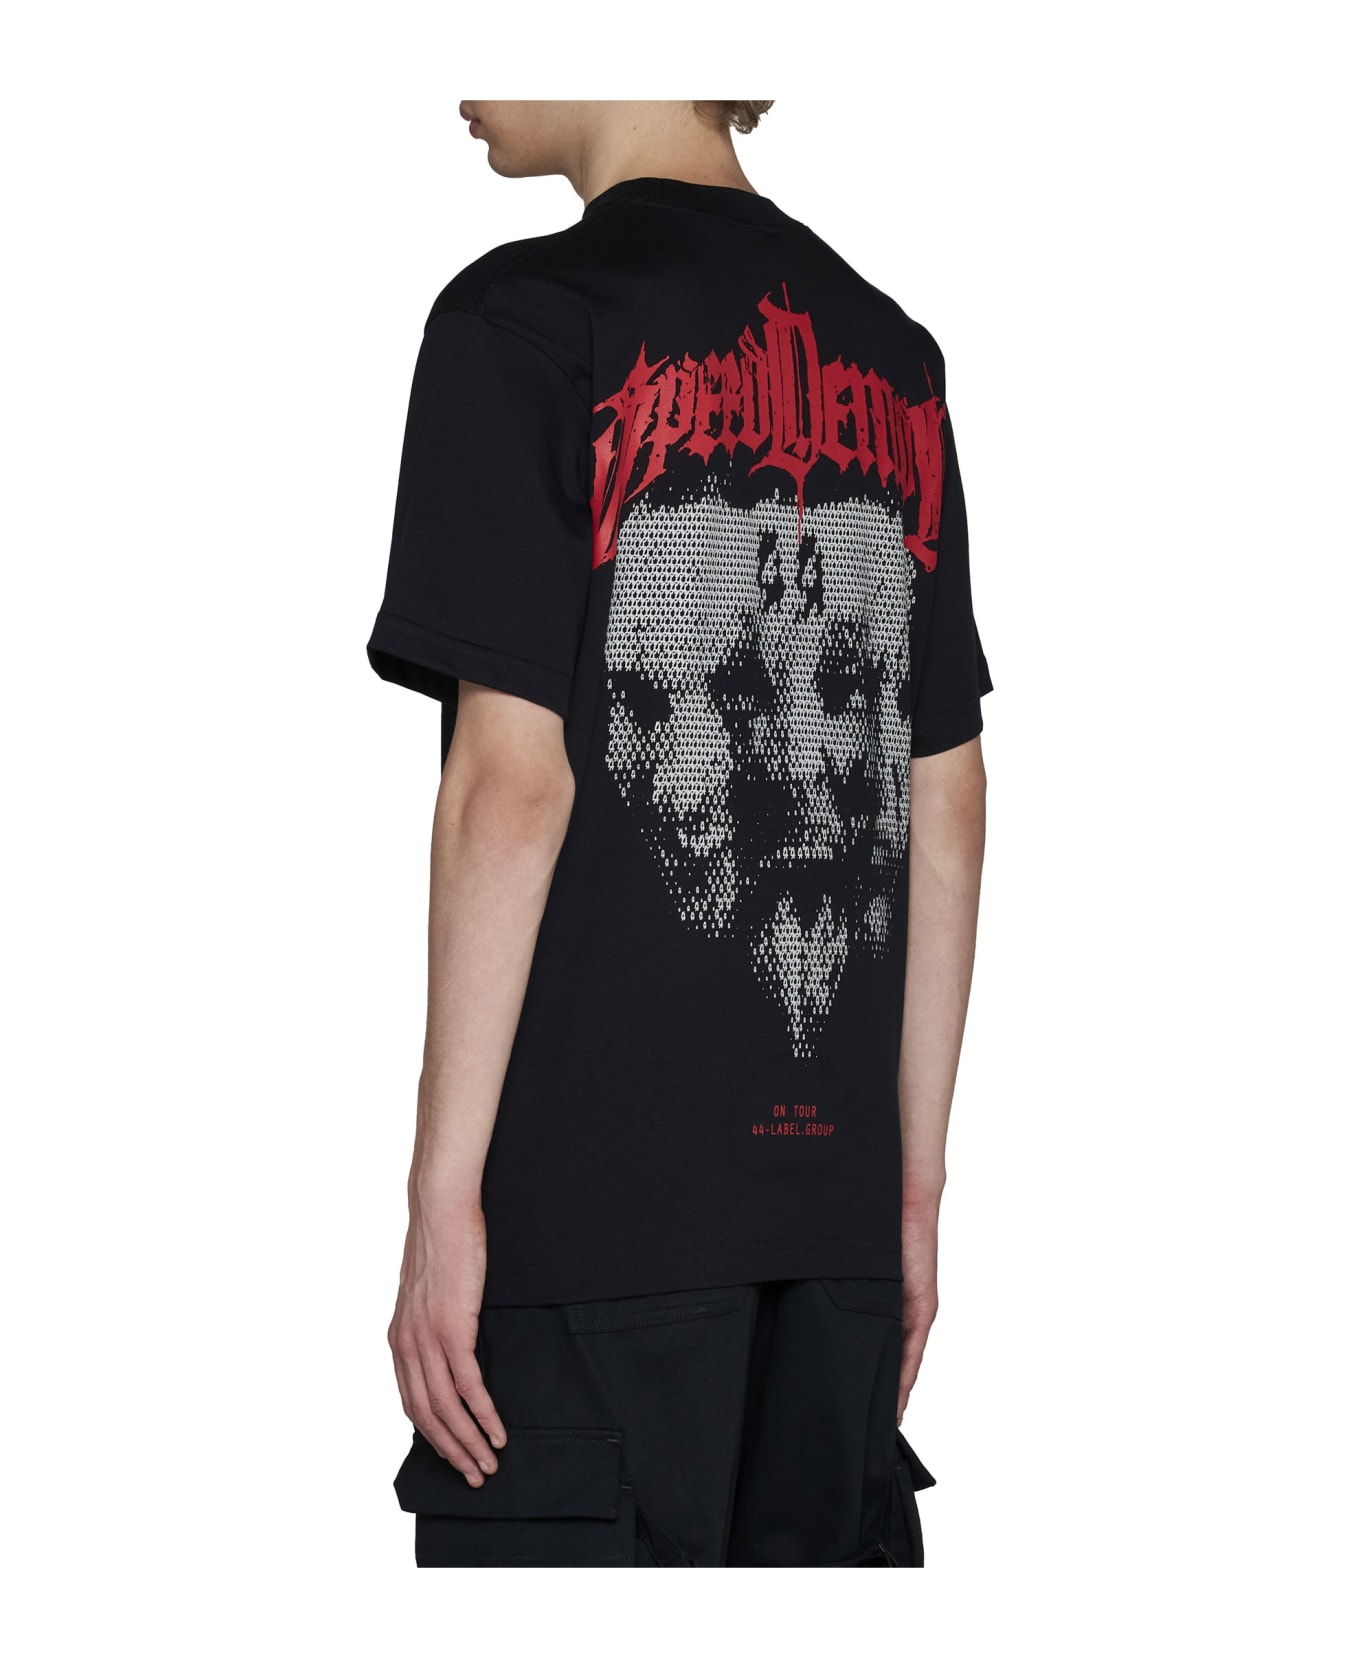 44 Label Group T-Shirt - Black+speed demon print